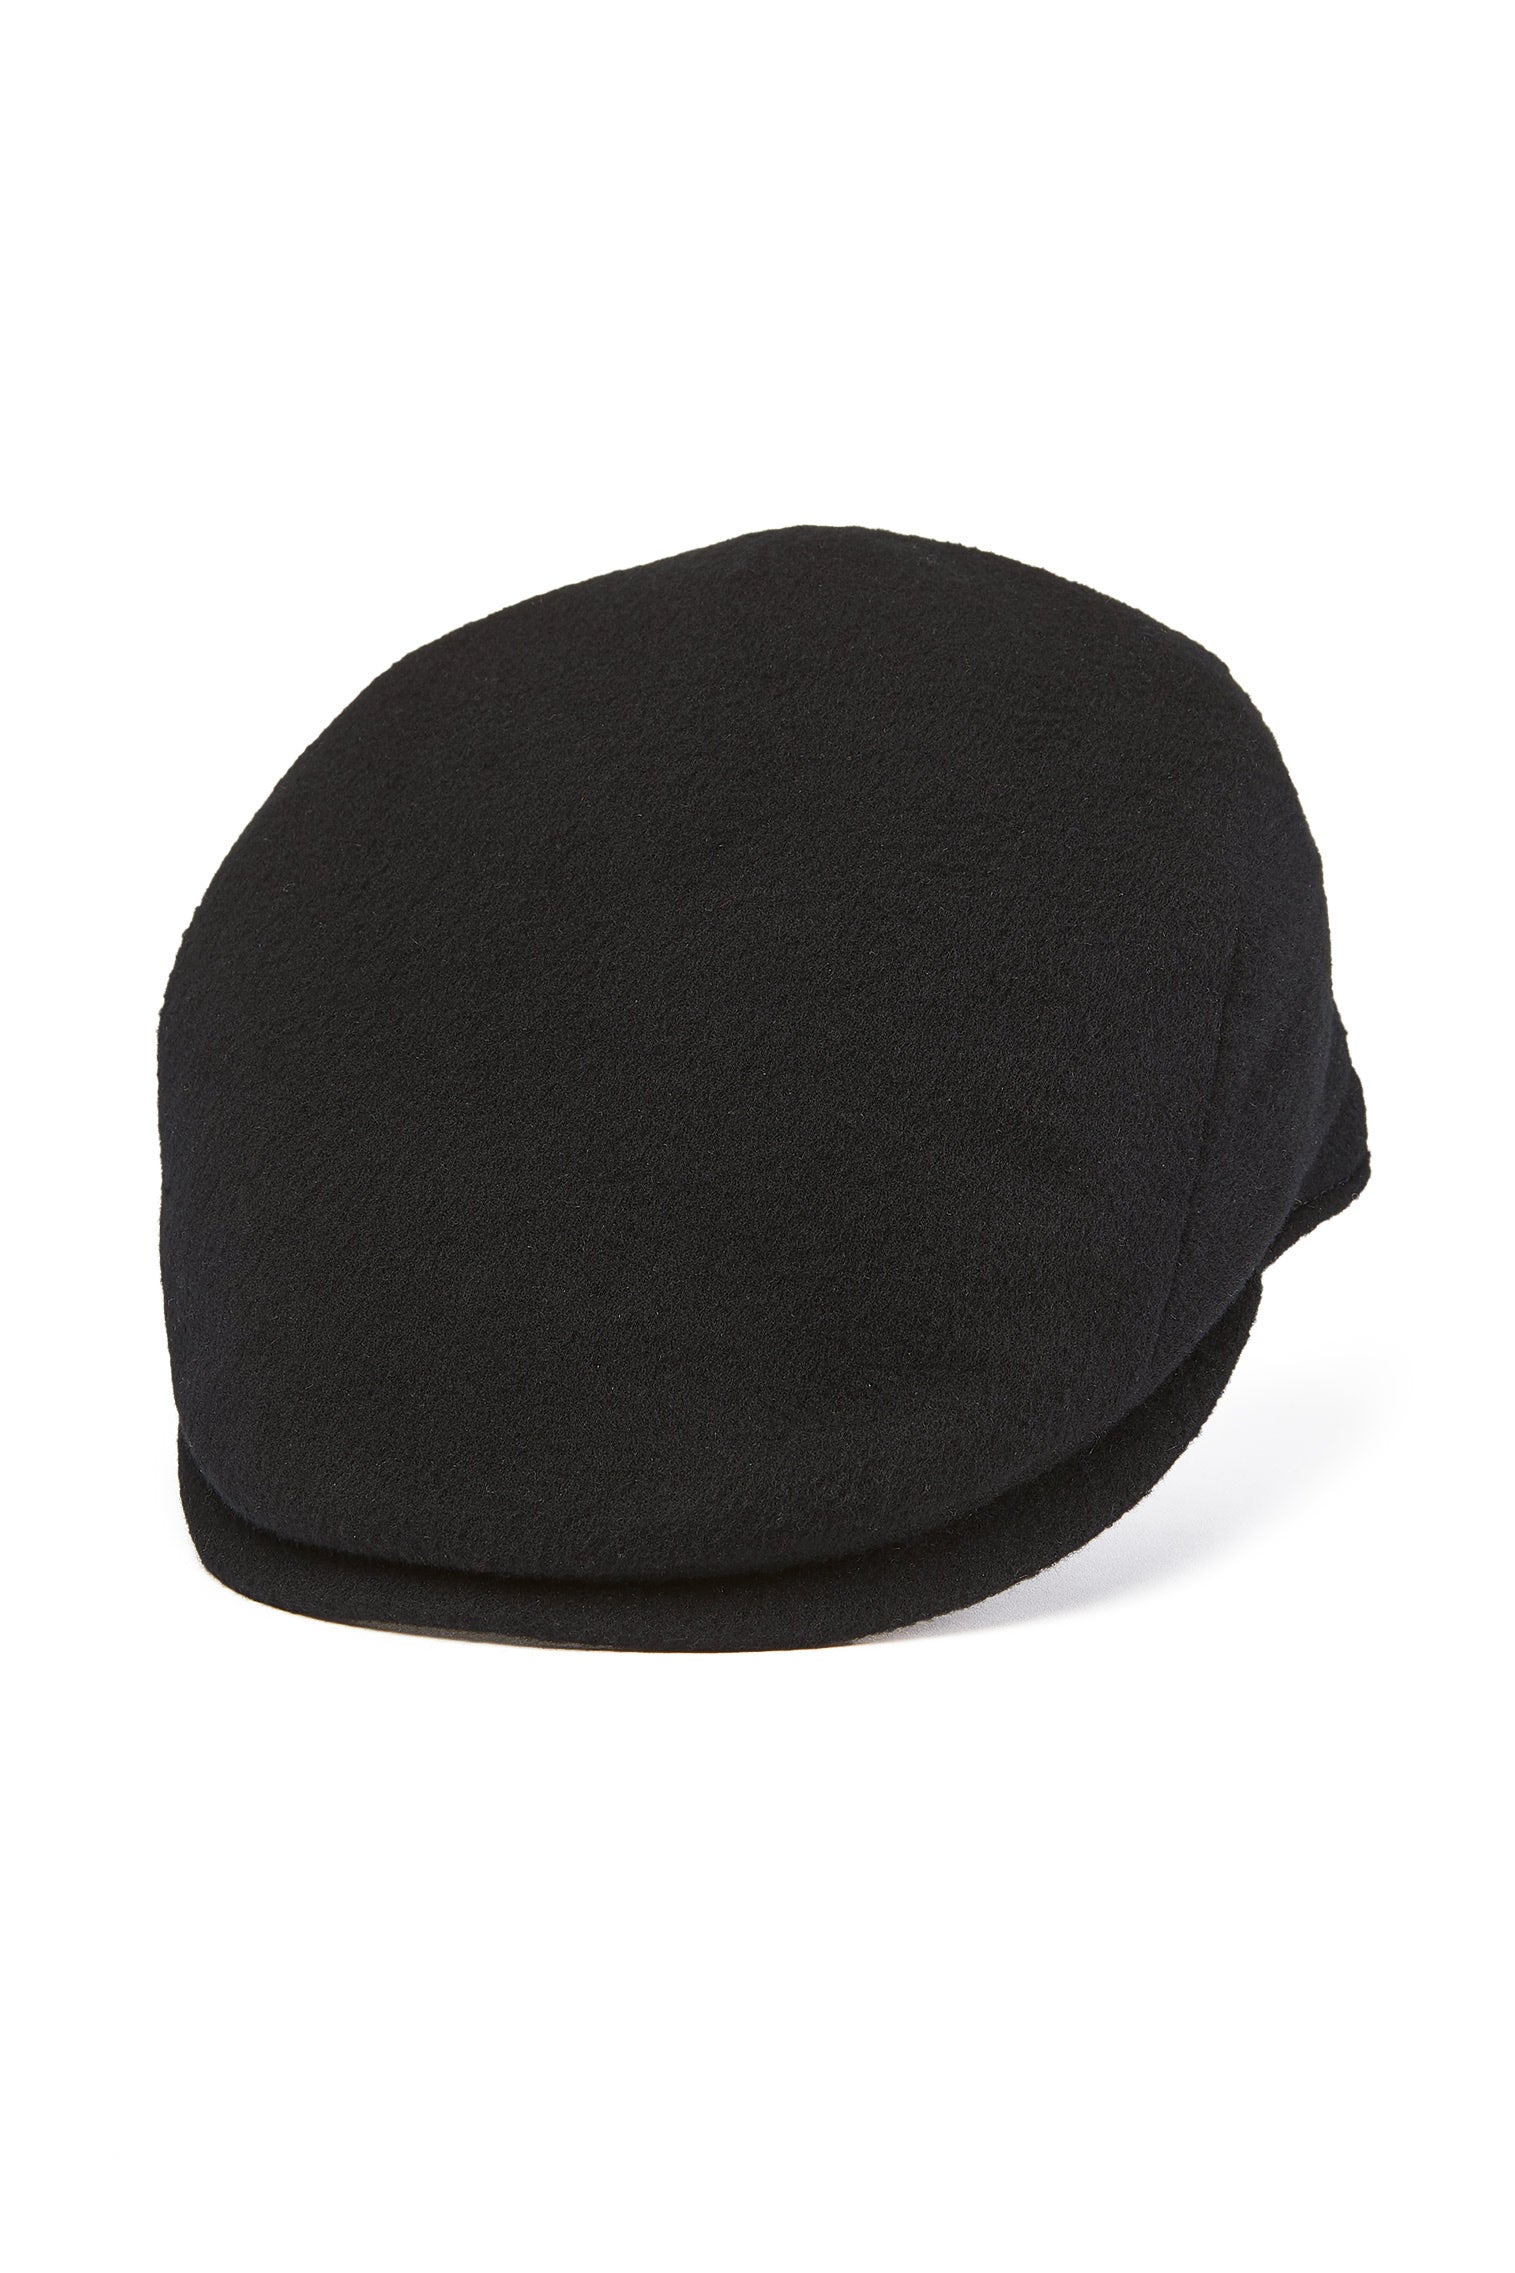 Escorial Wool Berkeley Flat Cap - Men's Hats - Lock & Co. Hatters London UK